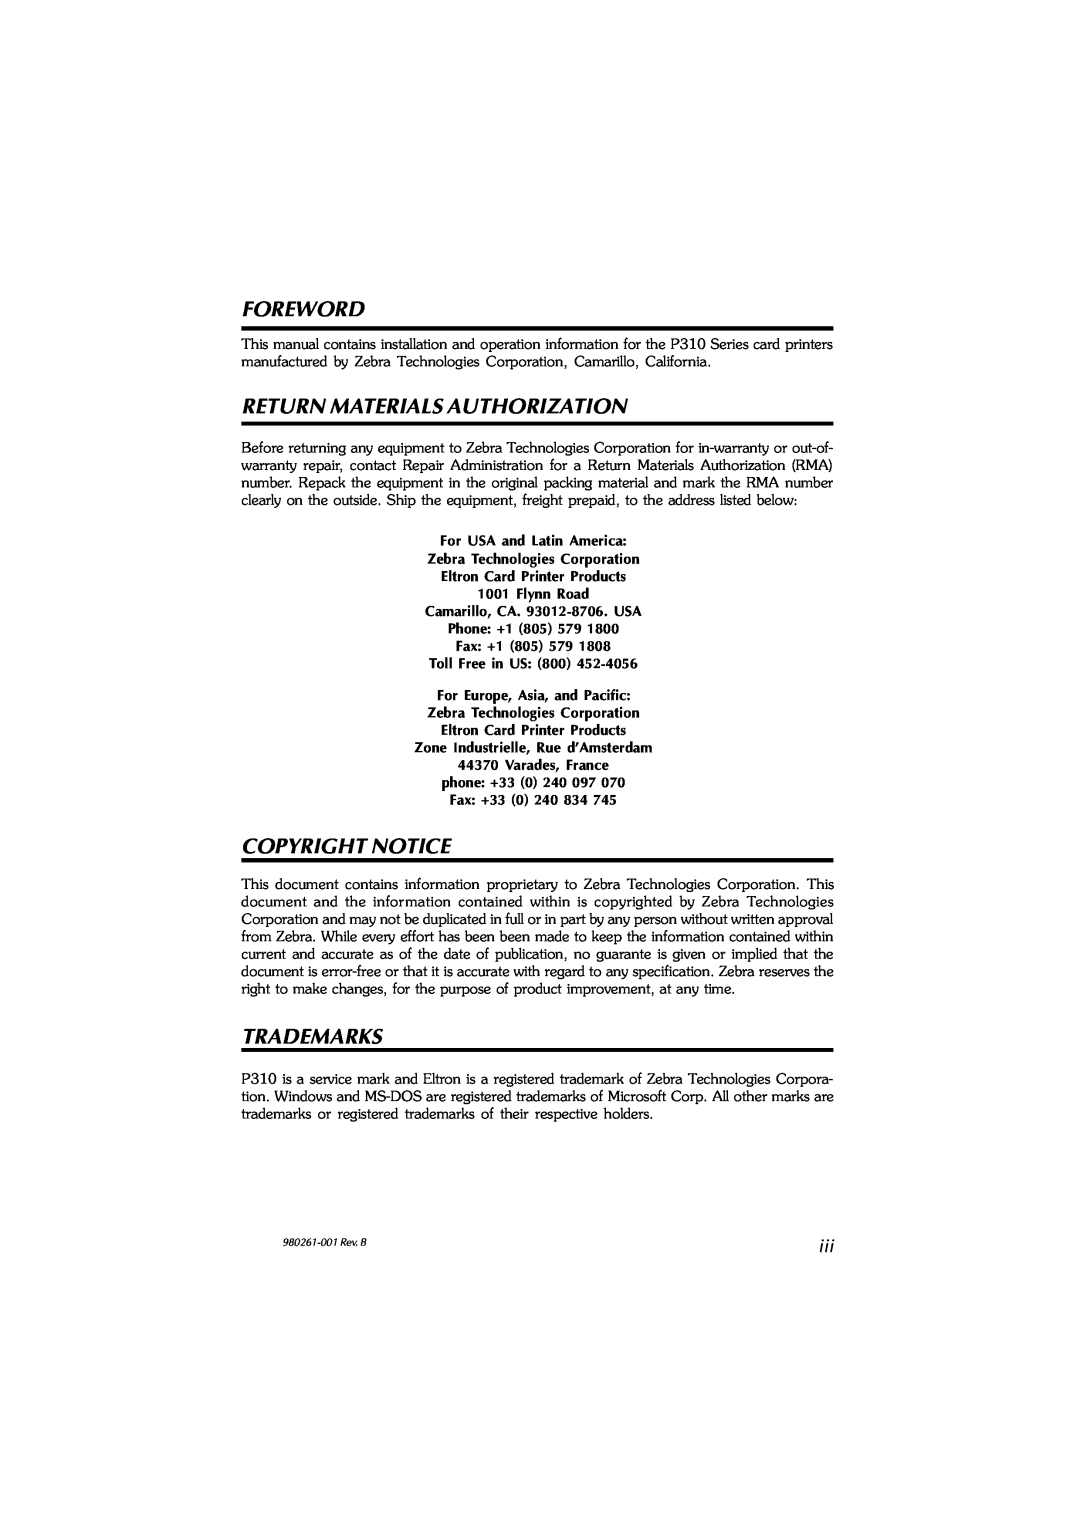 Zebra Technologies P310C, P310F user manual Foreword, Return Materials Authorization, Copyright Notice, Trademarks 